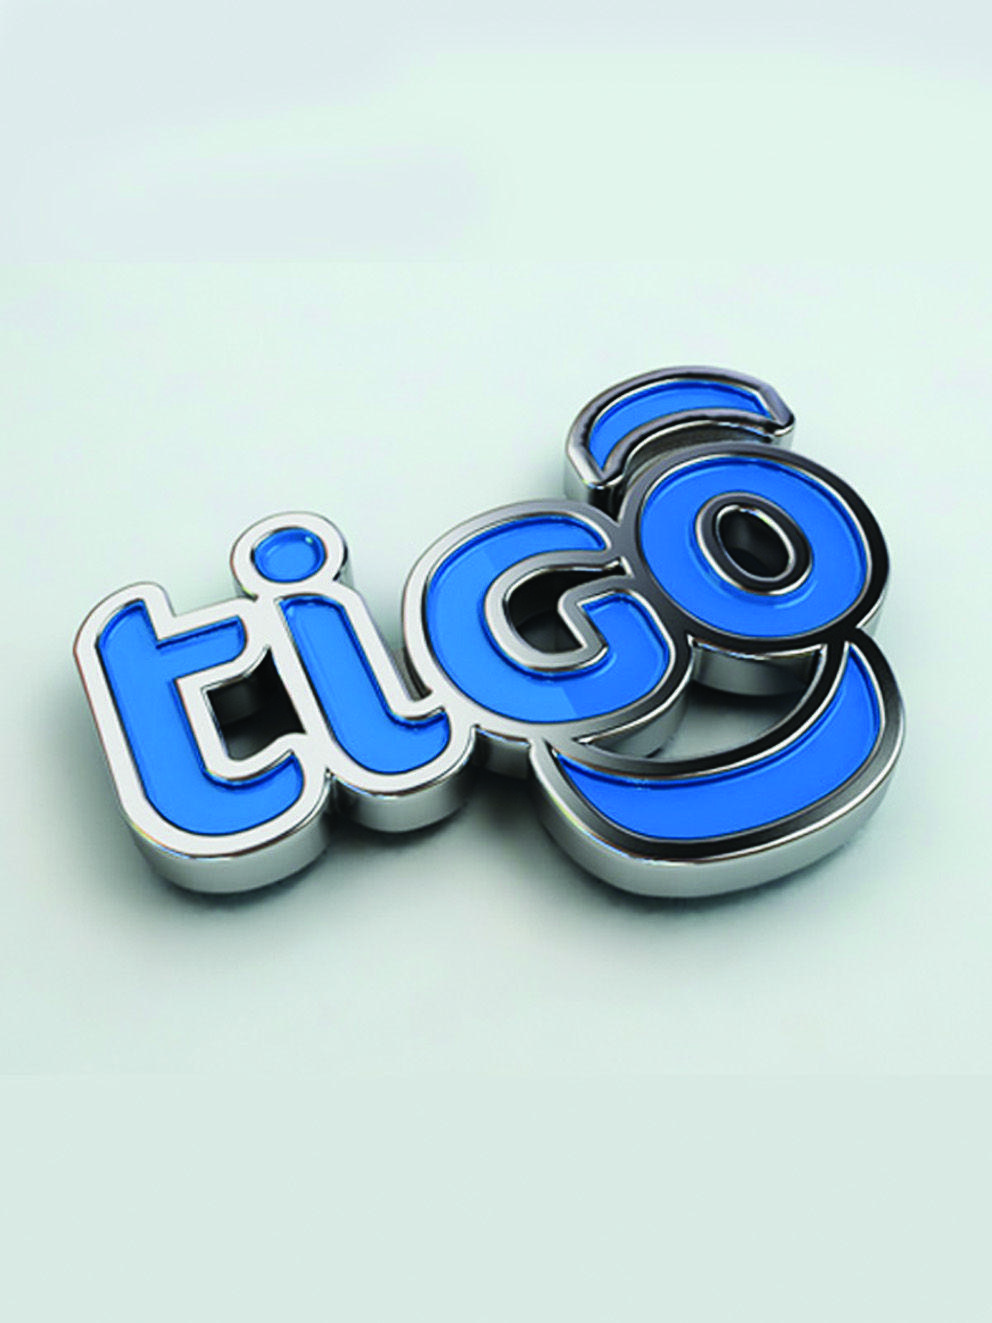 Pin Company Logo - Tigo Lapel Pin #Branding #Brand #Logo #Lapel #Pins. Branded Pins